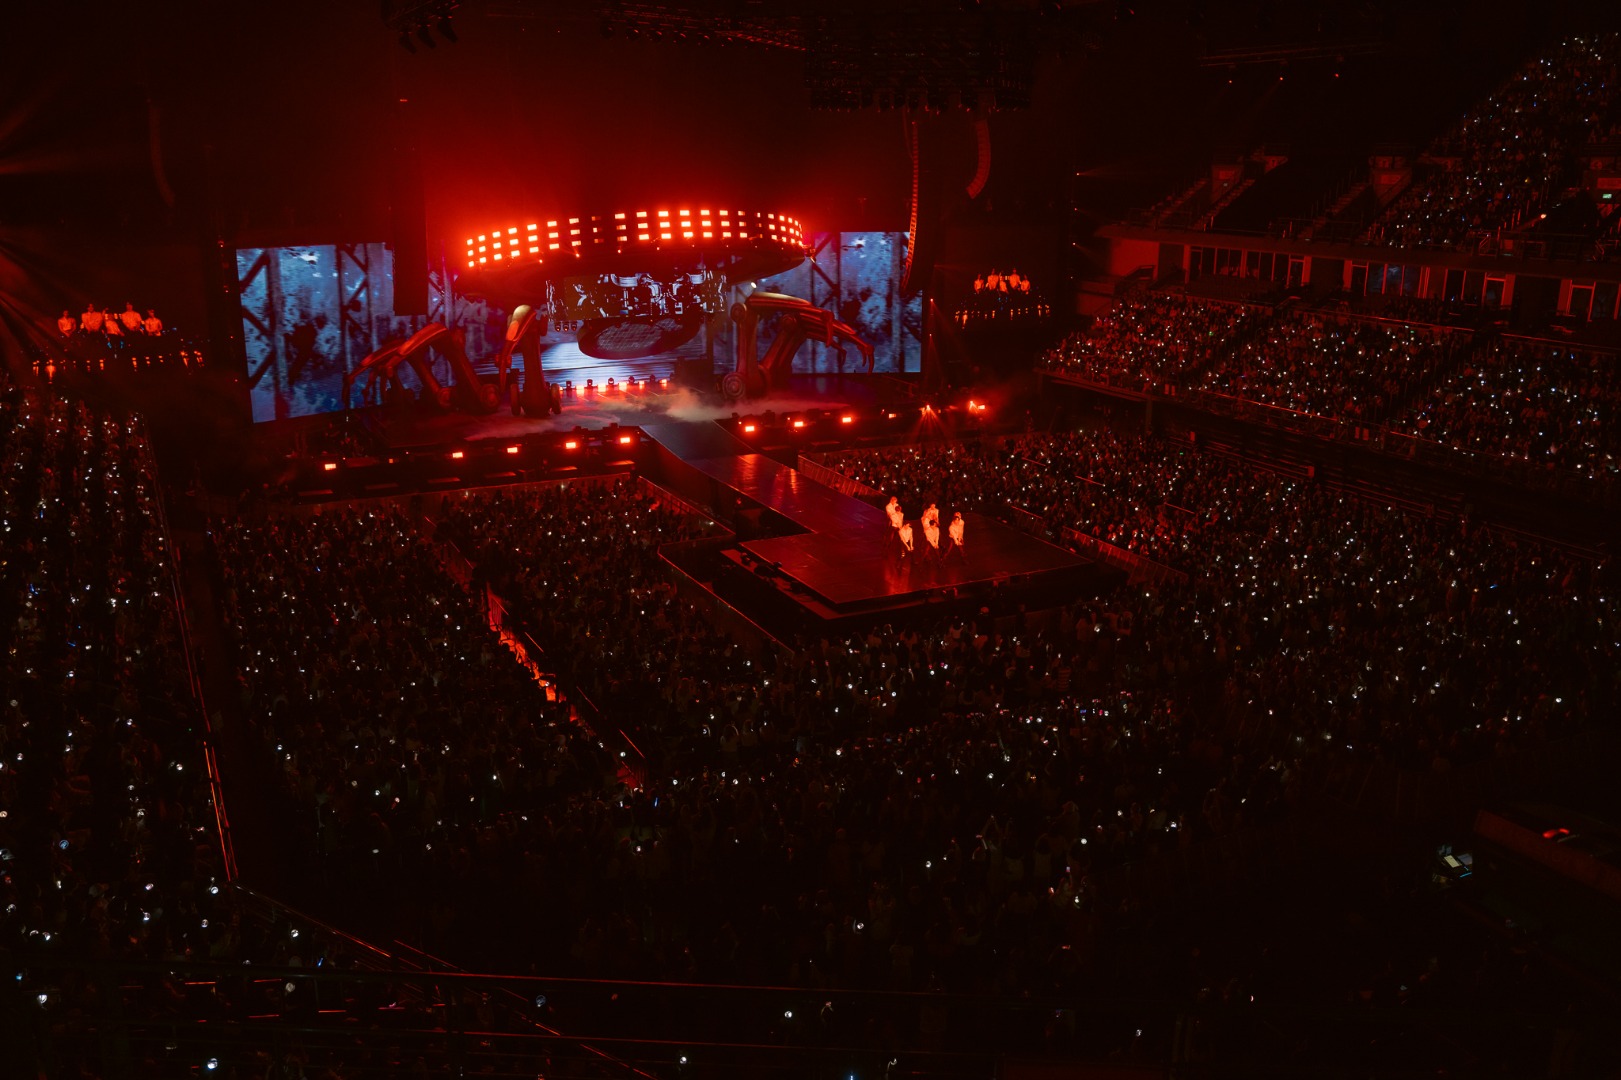 STRAY KIDS 2ND WORLD TOUR “MANIAC” Live in Bangkok